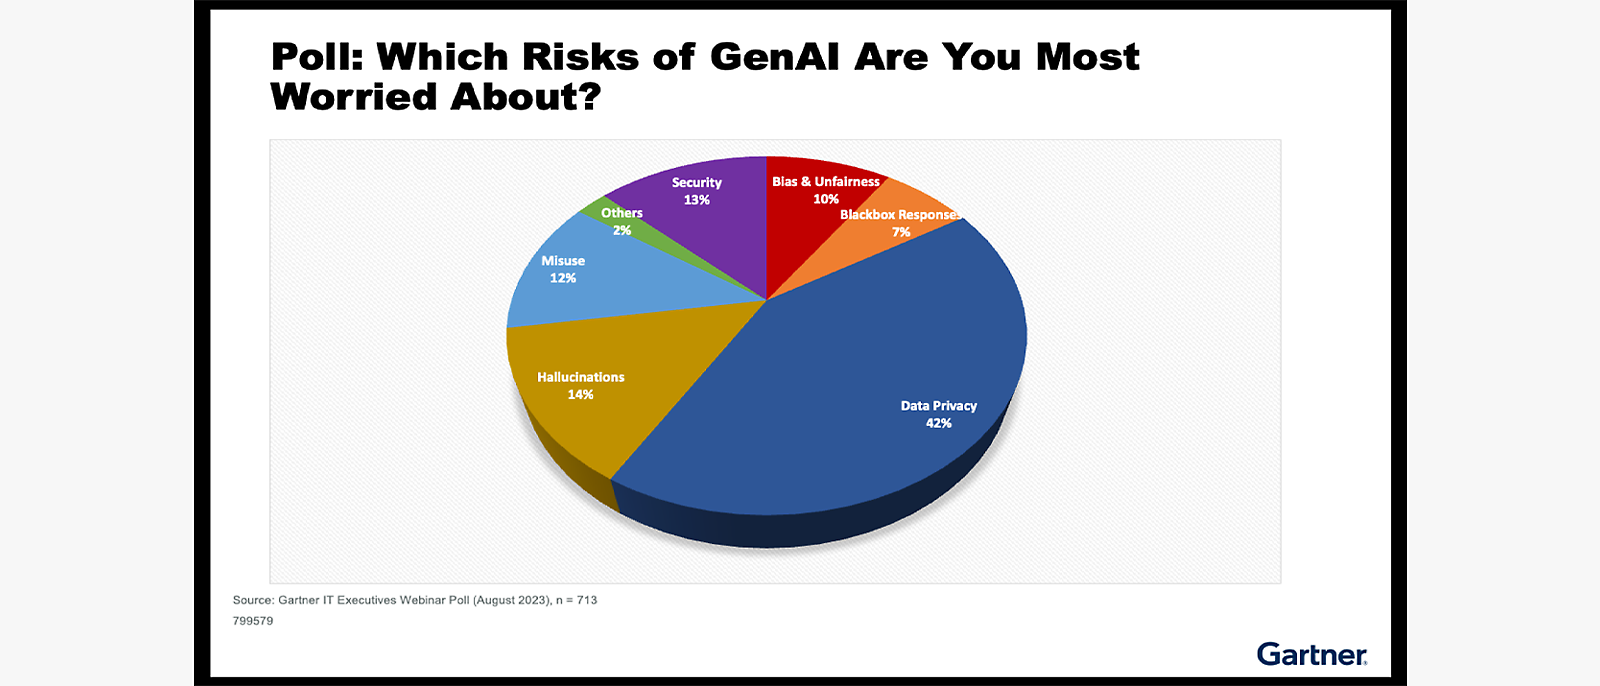 Poll results on GenAI risks: Data Privacy major concern, 42%